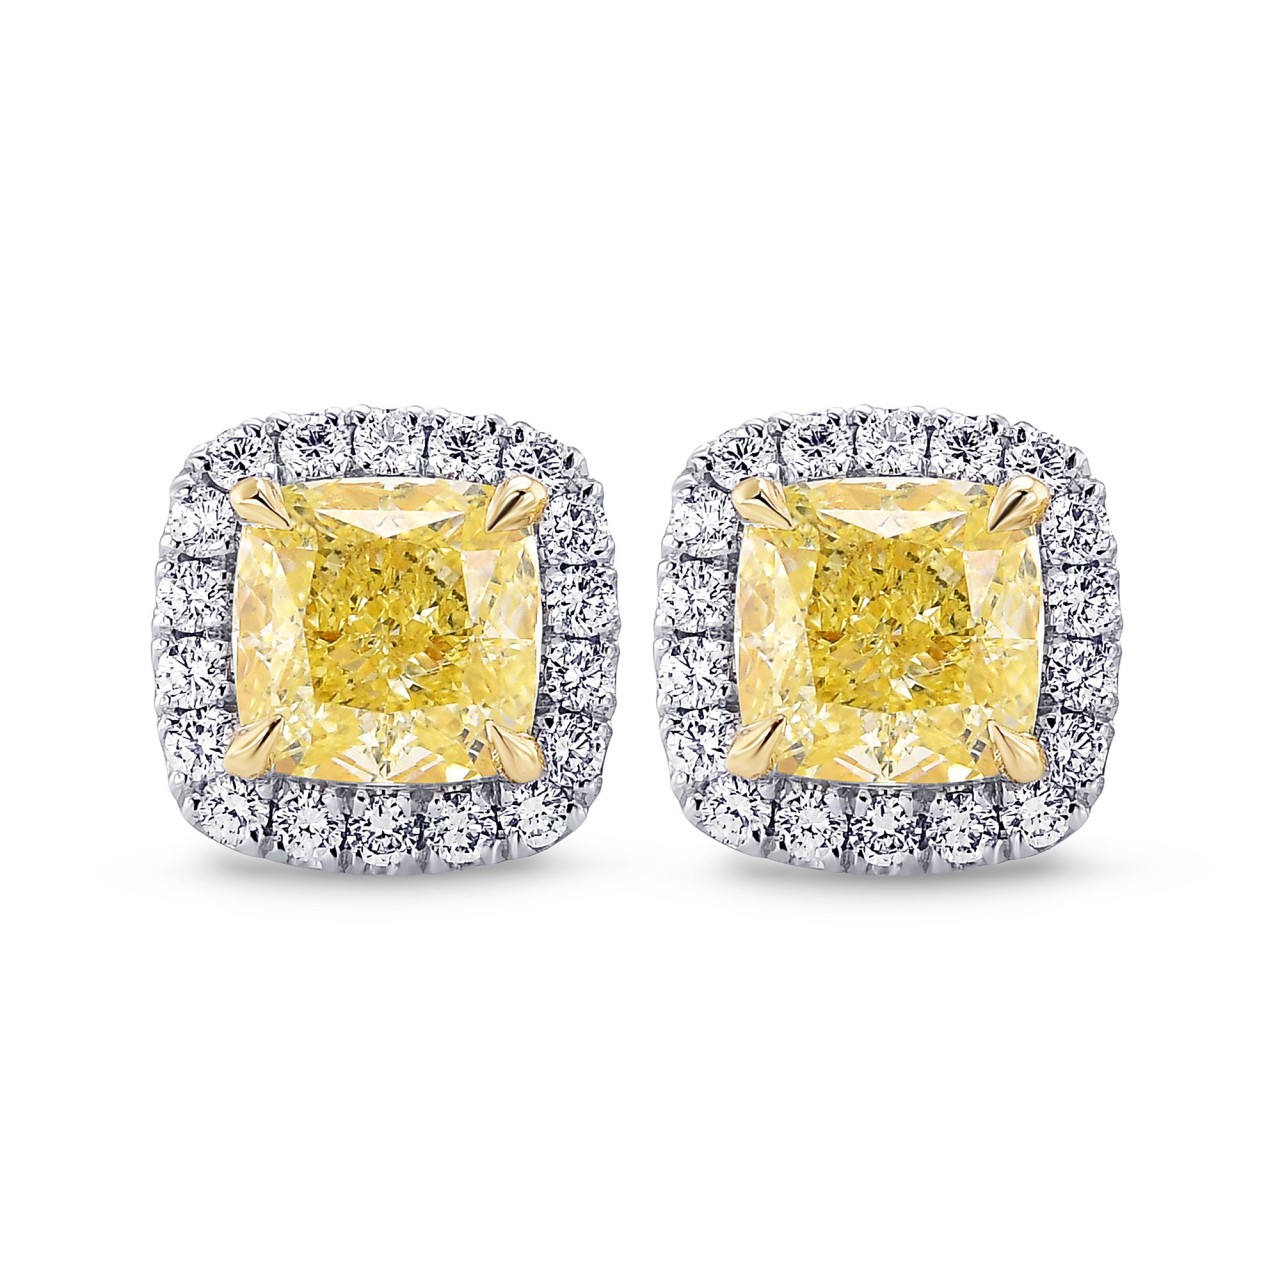 Fancy Light Yellow Cushion Halo Diamond Earrings, SKU 385628 (3.21Ct TW)